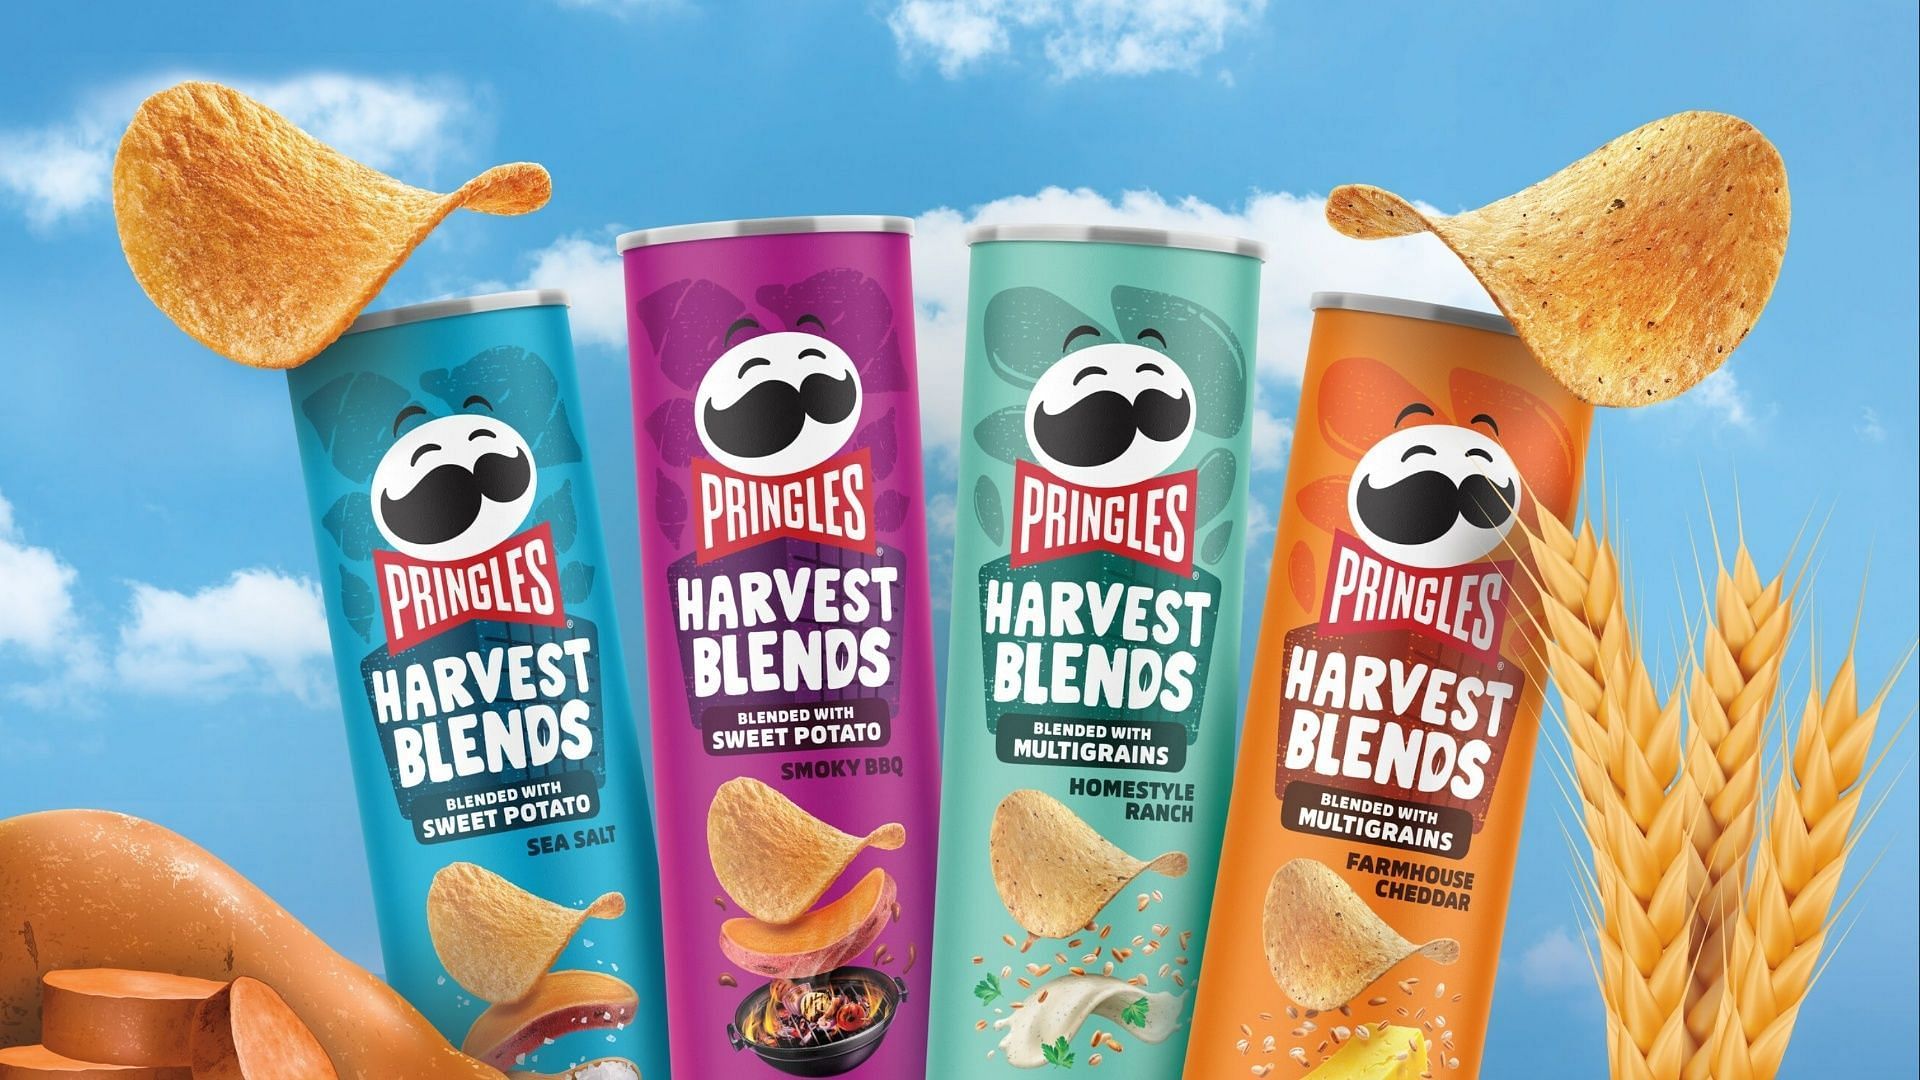 Pringles introduces the new Harvest Blends crisps lineup (Image via Pringles)